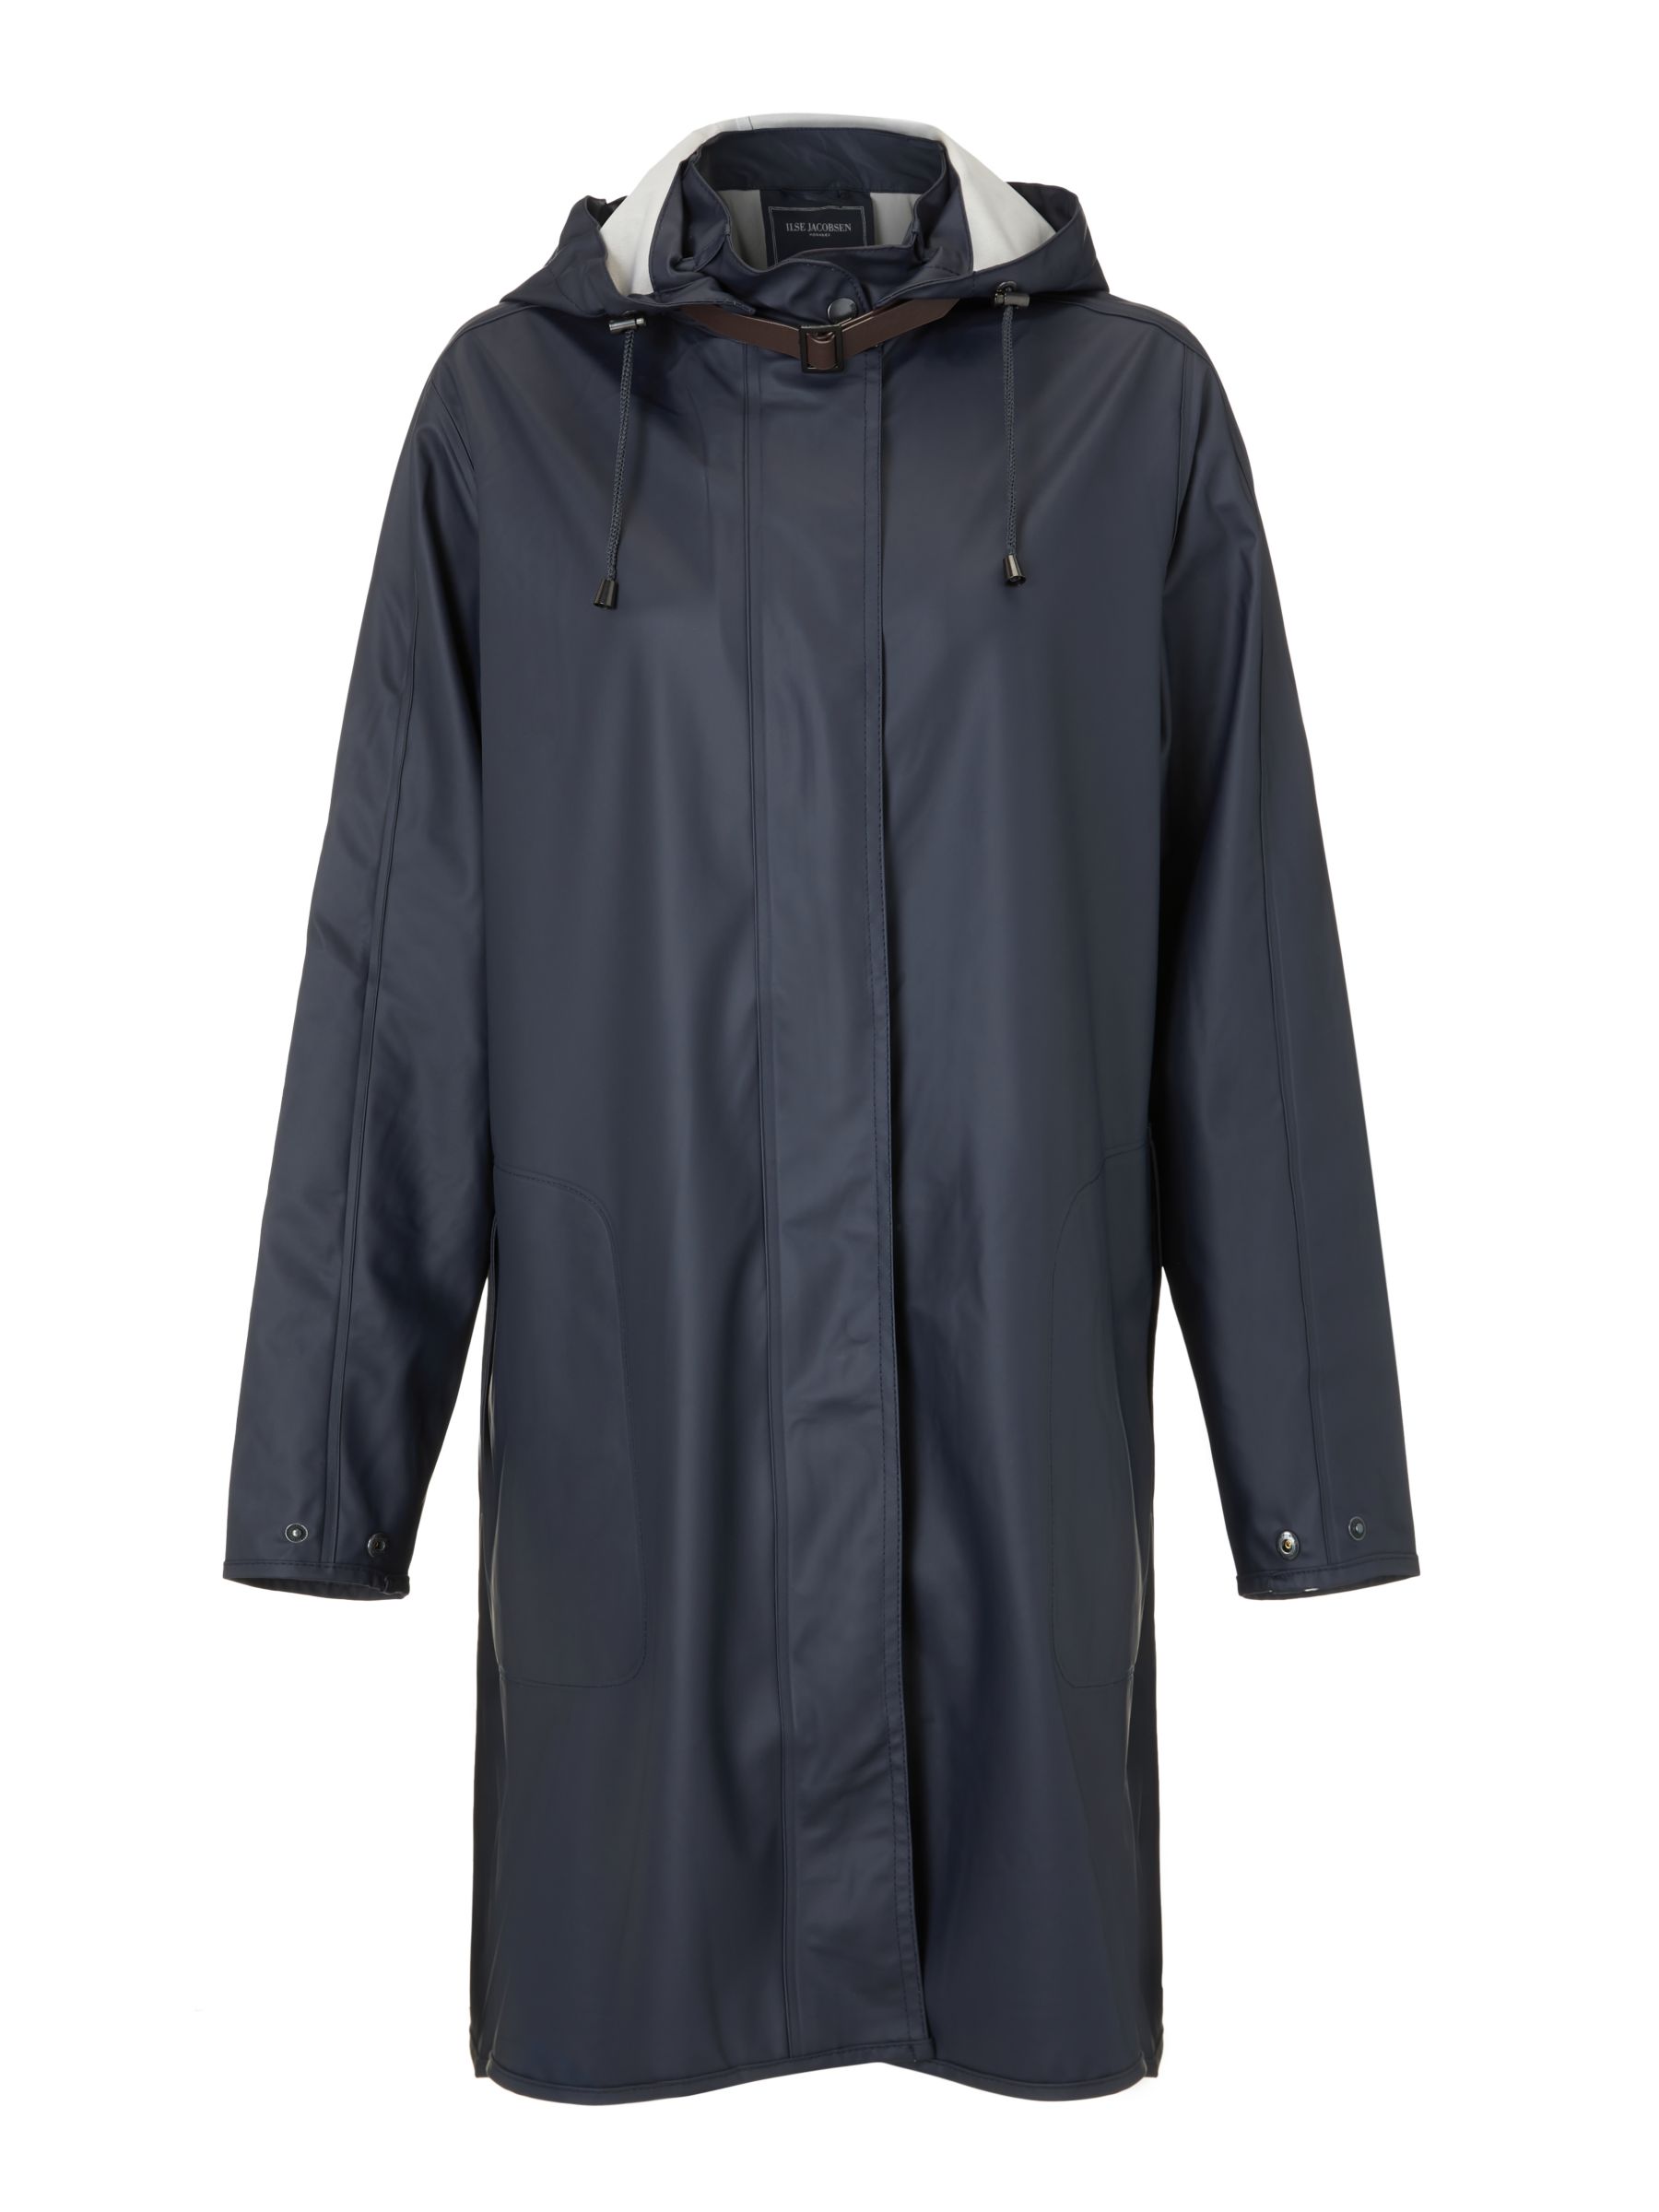 Ilse Jacobsen Hornbæk A-Line Raincoat, Dark Indigo at John Lewis & Partners